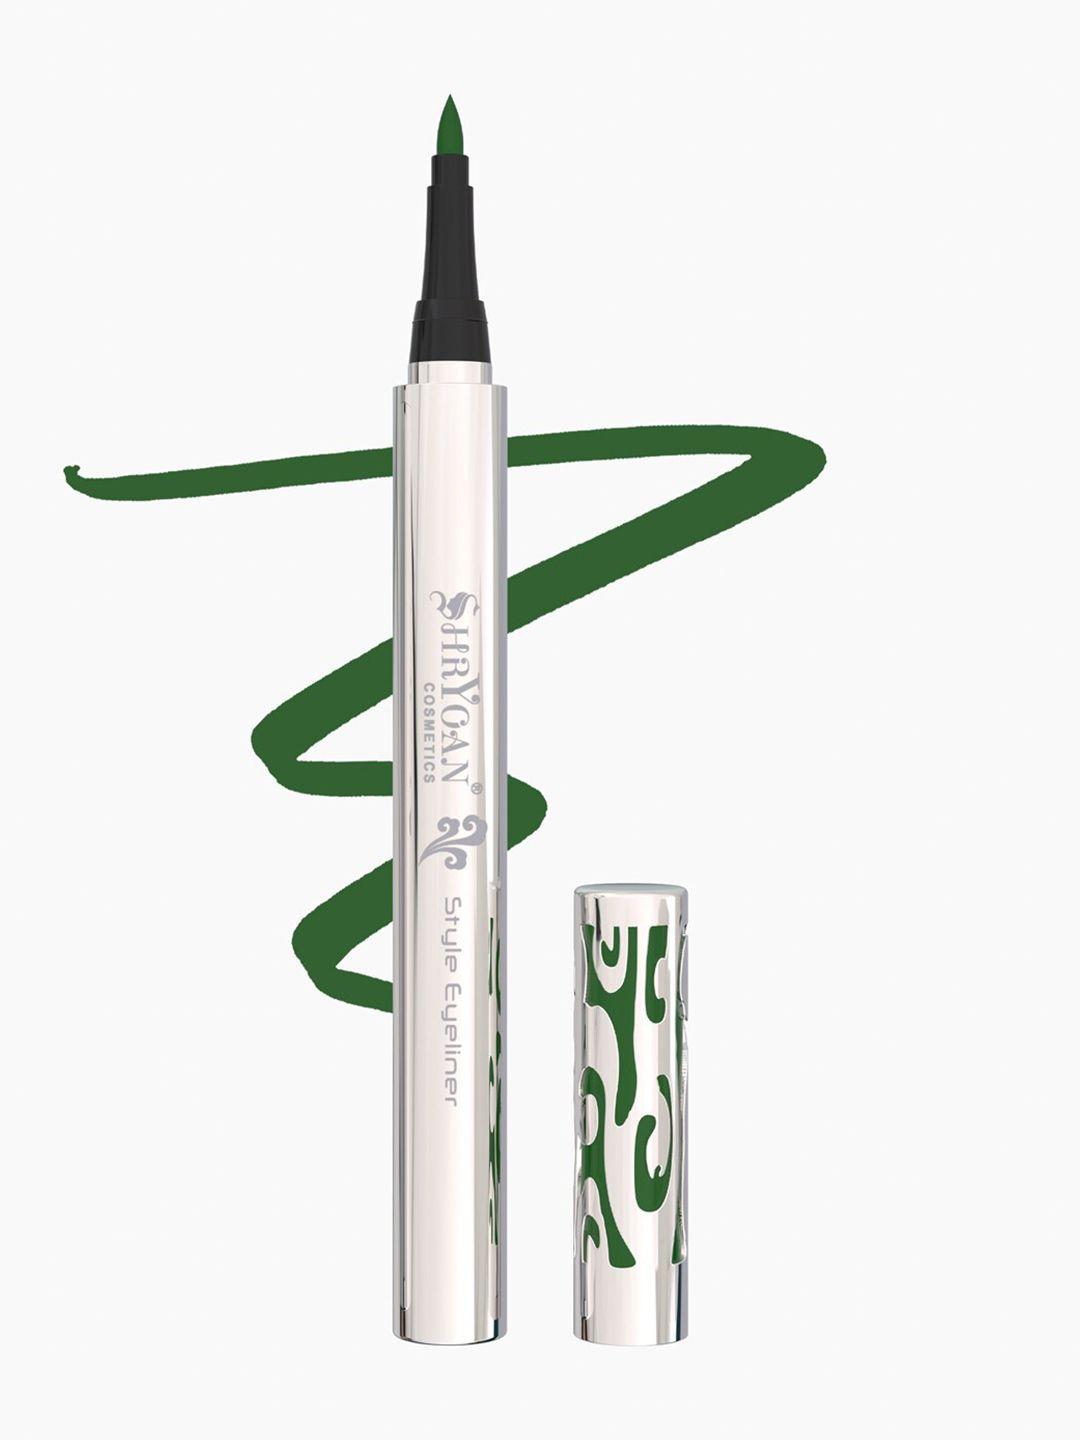 shryoan style long lasting eyeliner pen - 1.25g - green 003